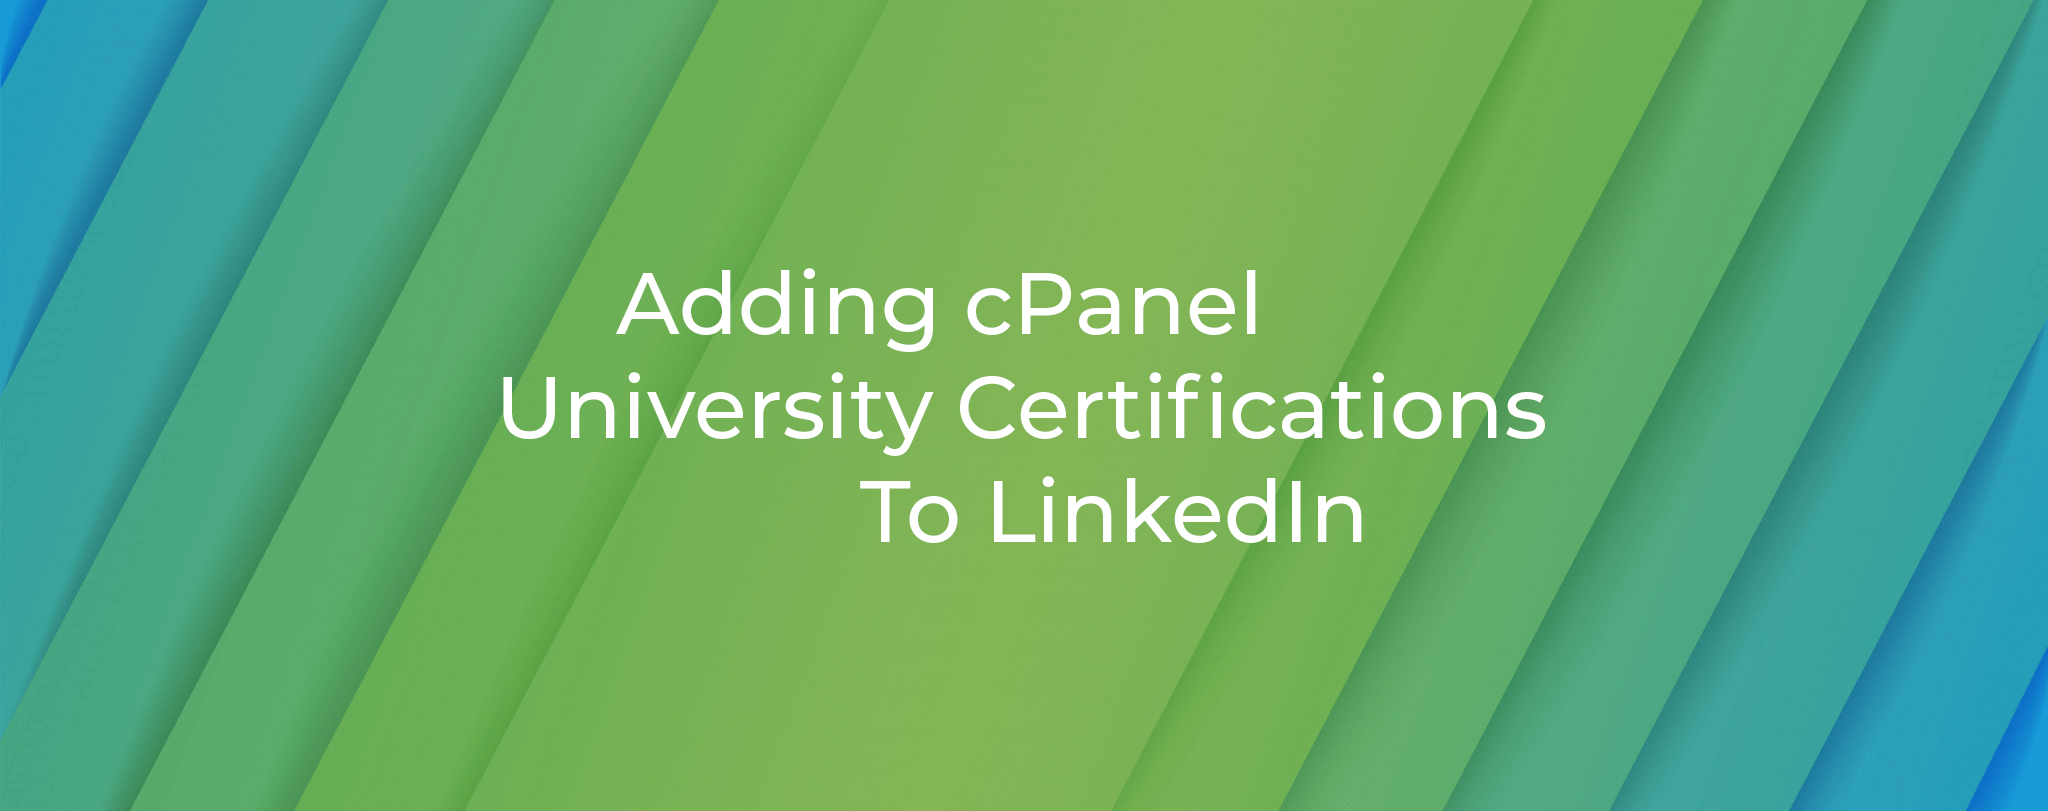 Adding cPanel University Certificates To LinkedIn